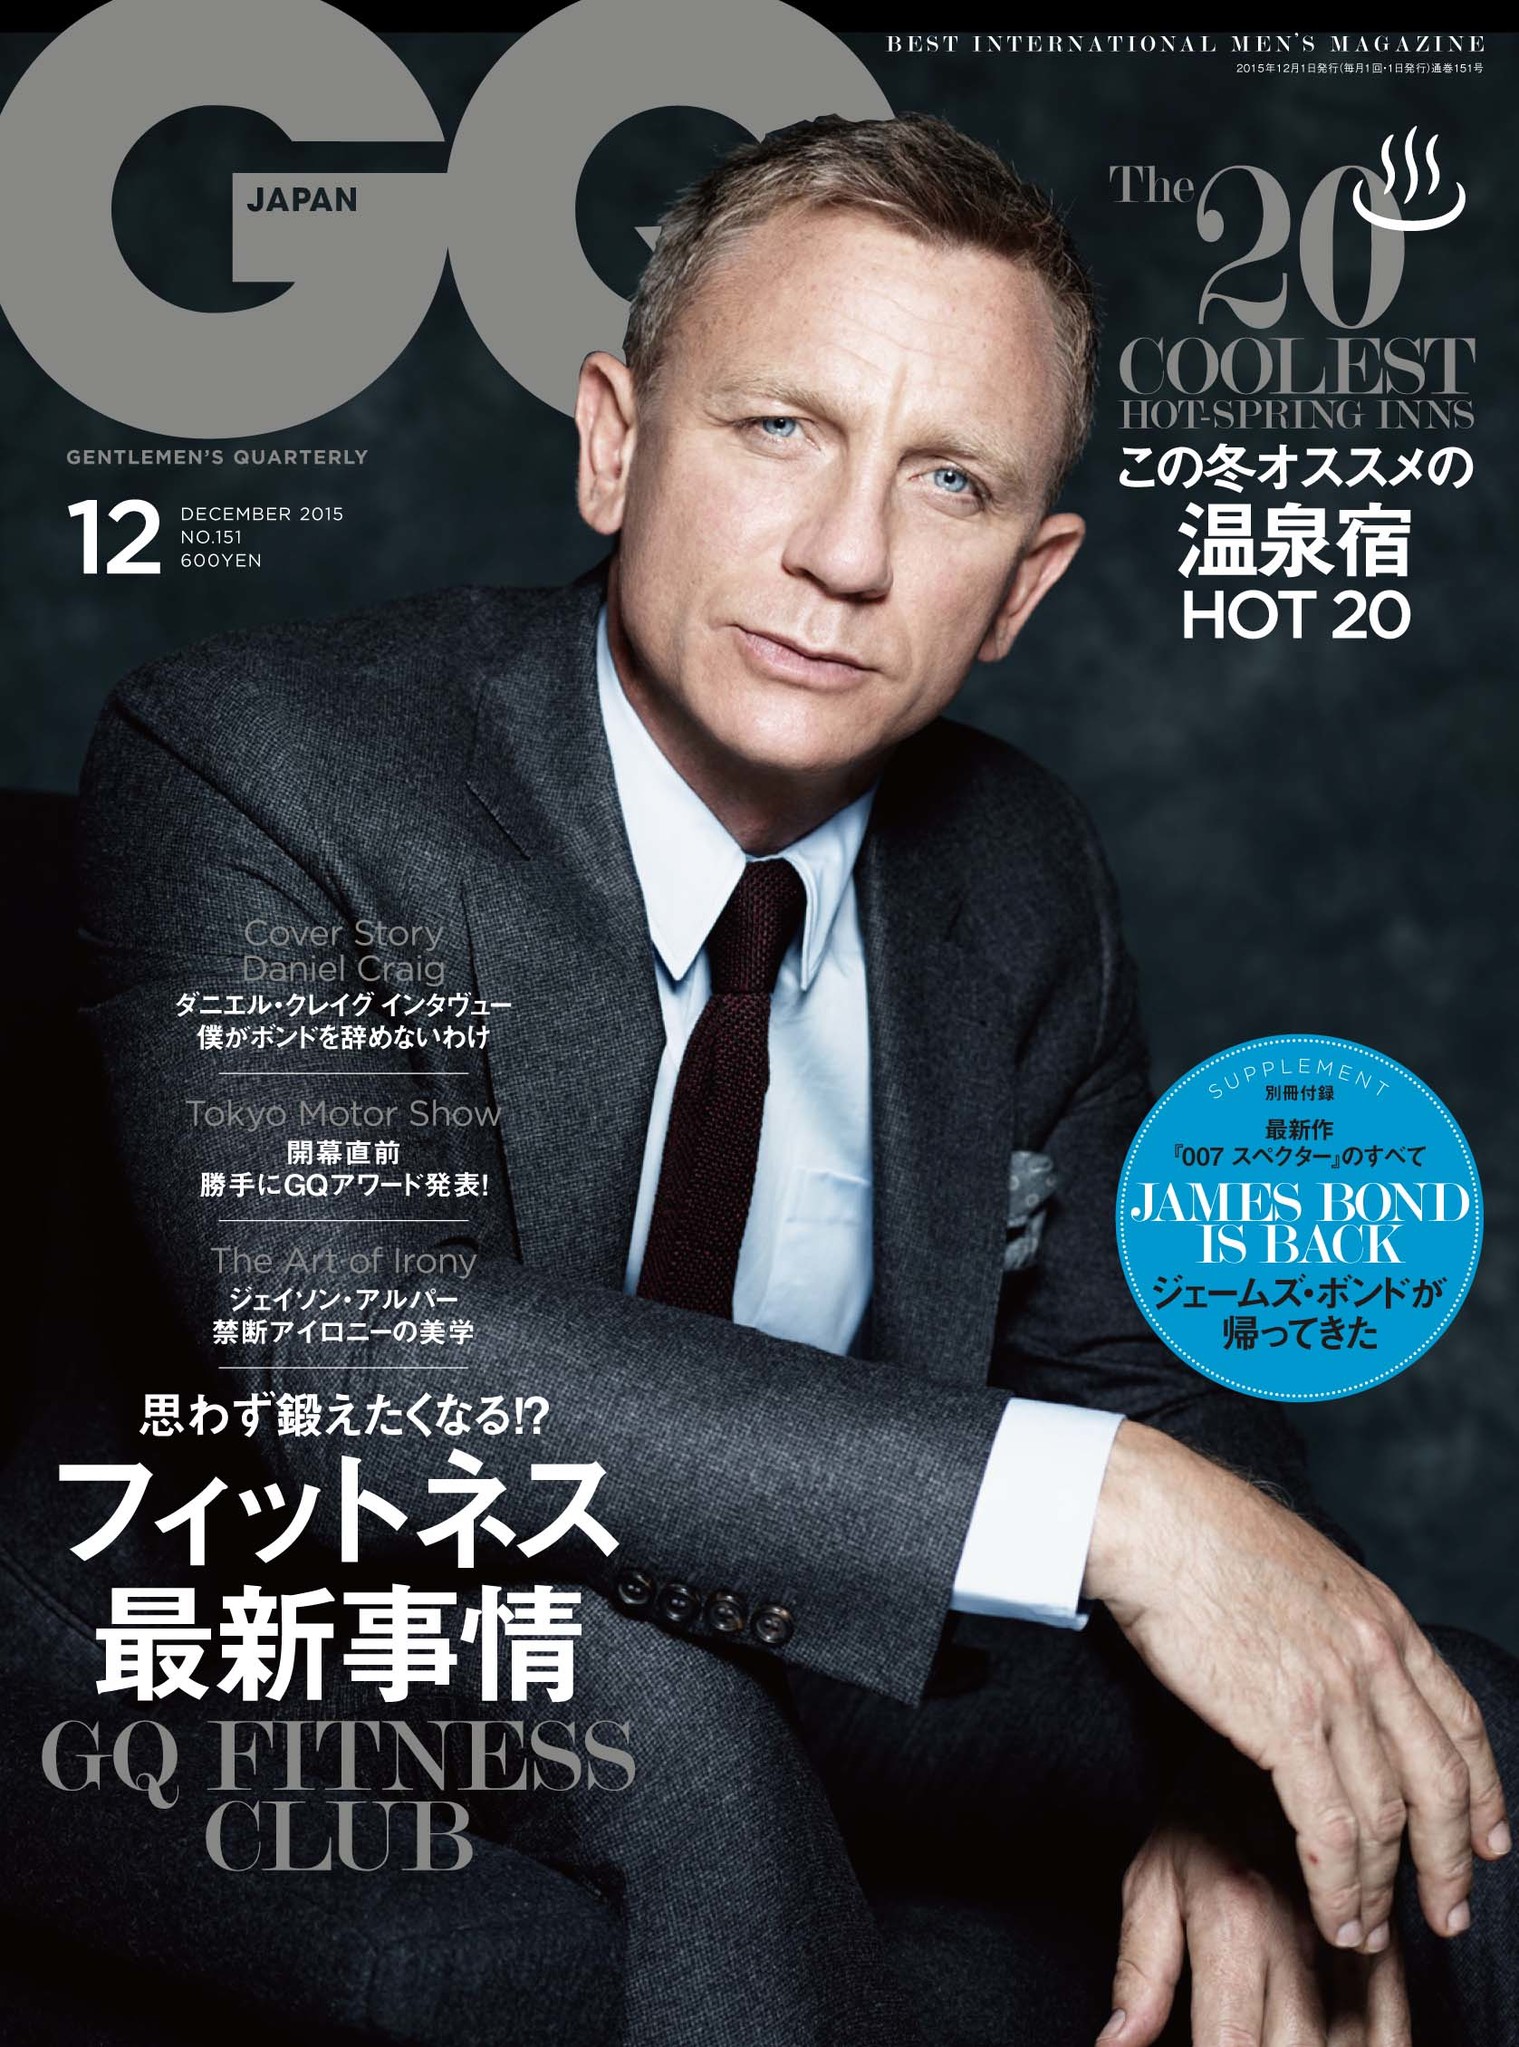 Gq Japan 15年12月号 007 スペクター 主演 ダニエル クレイグ登場 僕がボンドを辞めないわけ 別冊付録 James Bond Is Back コンデナスト ジャパンのプレスリリース